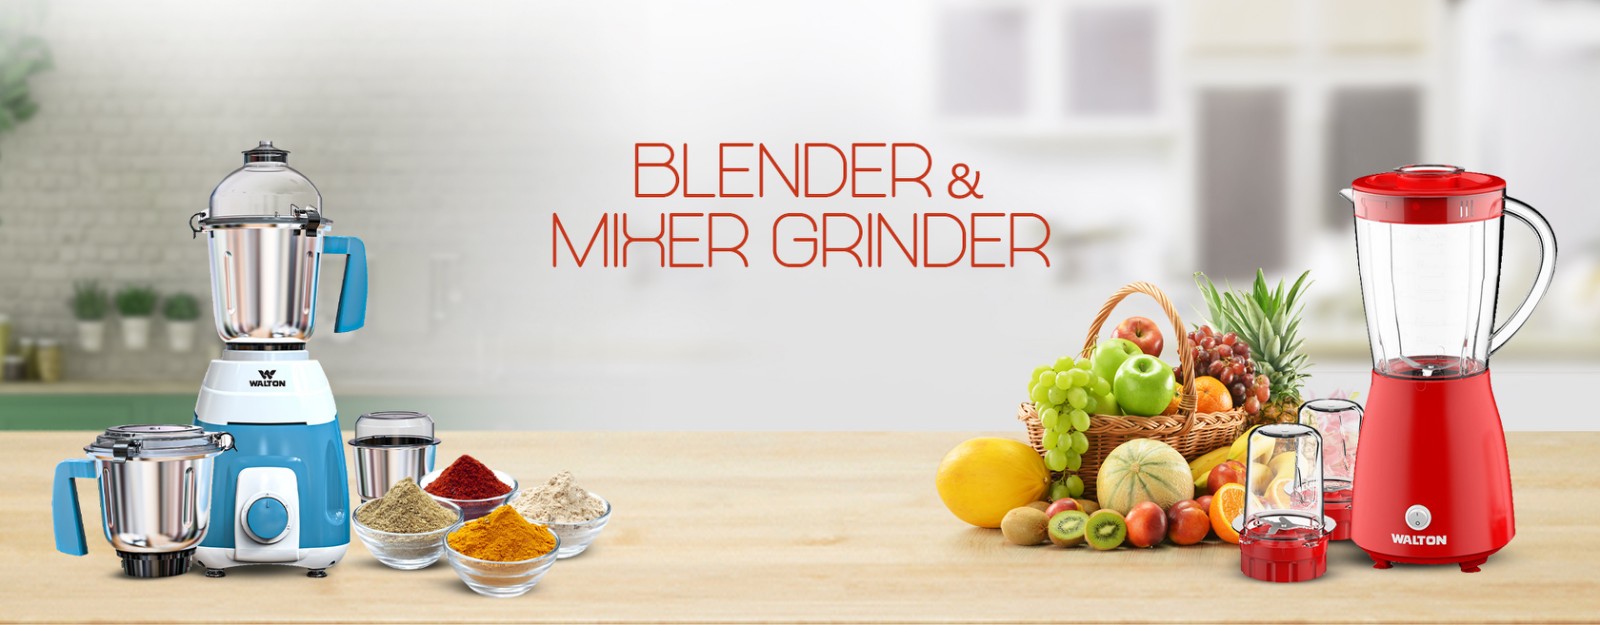 Blender and Mixer Grinder Machine Price in Bangladesh